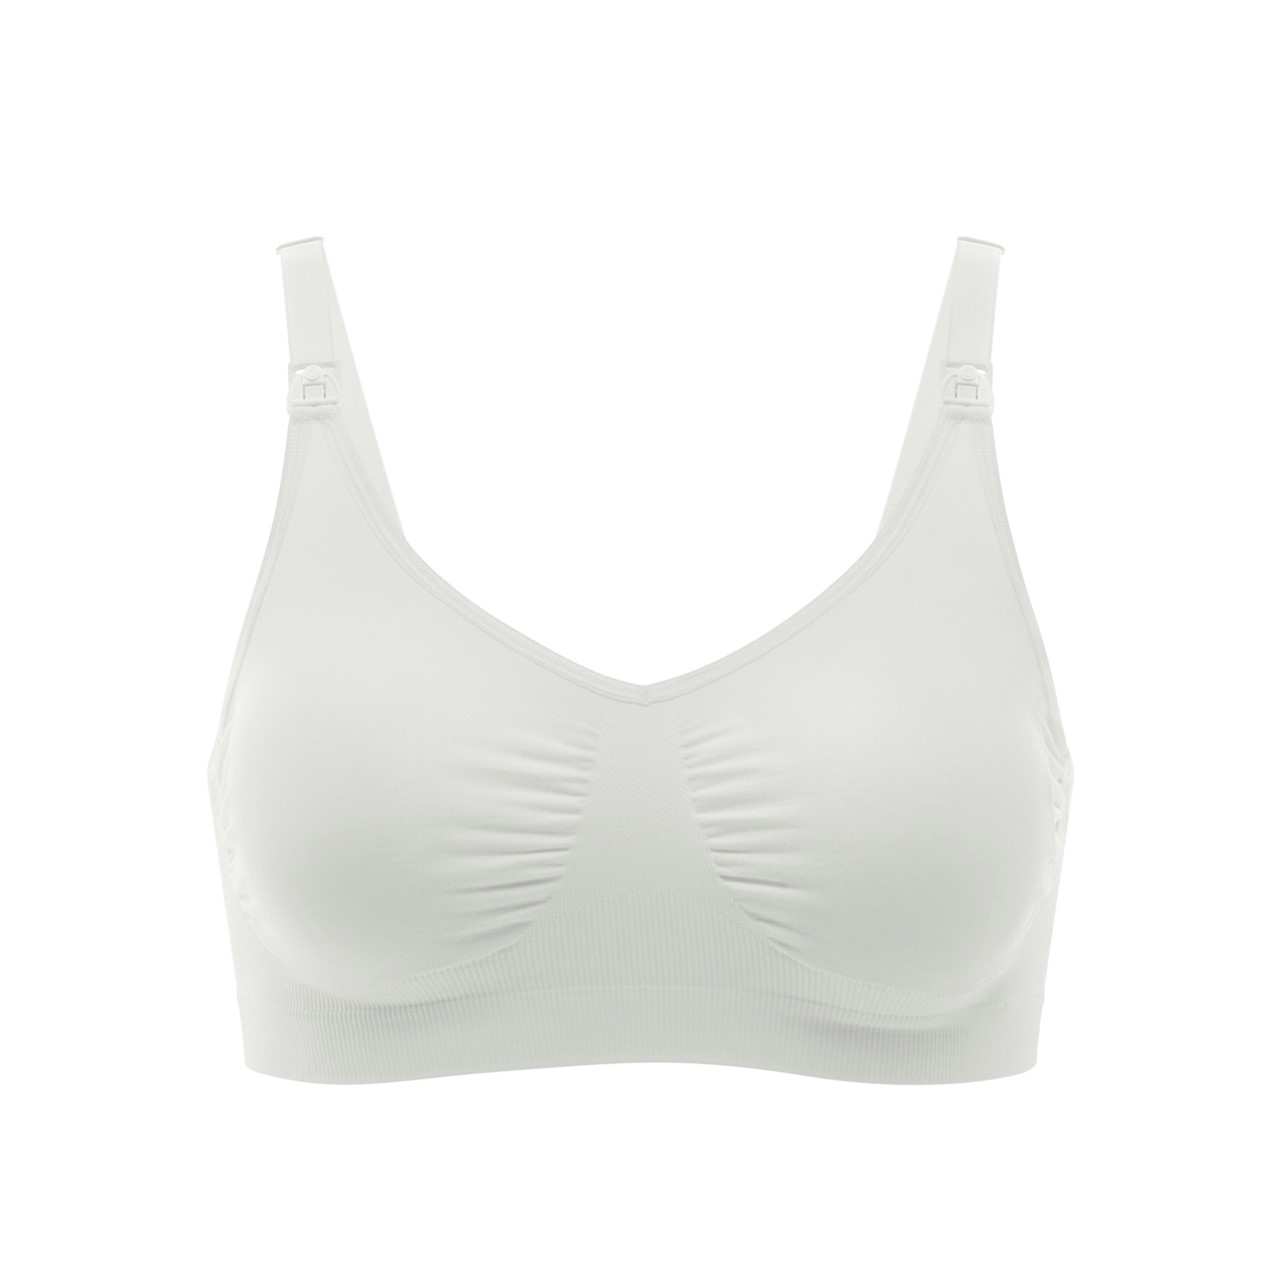 https://static.beautytocare.com/media/catalog/product/m/e/medela-maternity-and-nursing-bra-white-extra-large-size-x1.jpg